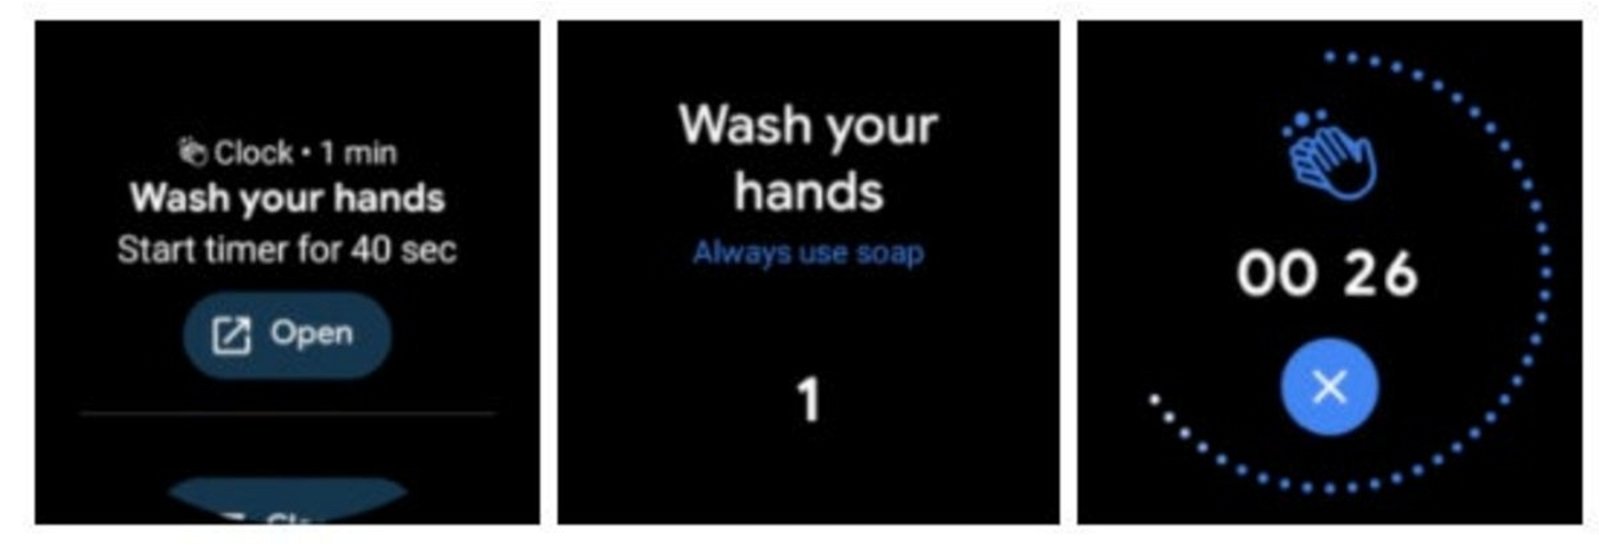 wear os lavar manos aviso